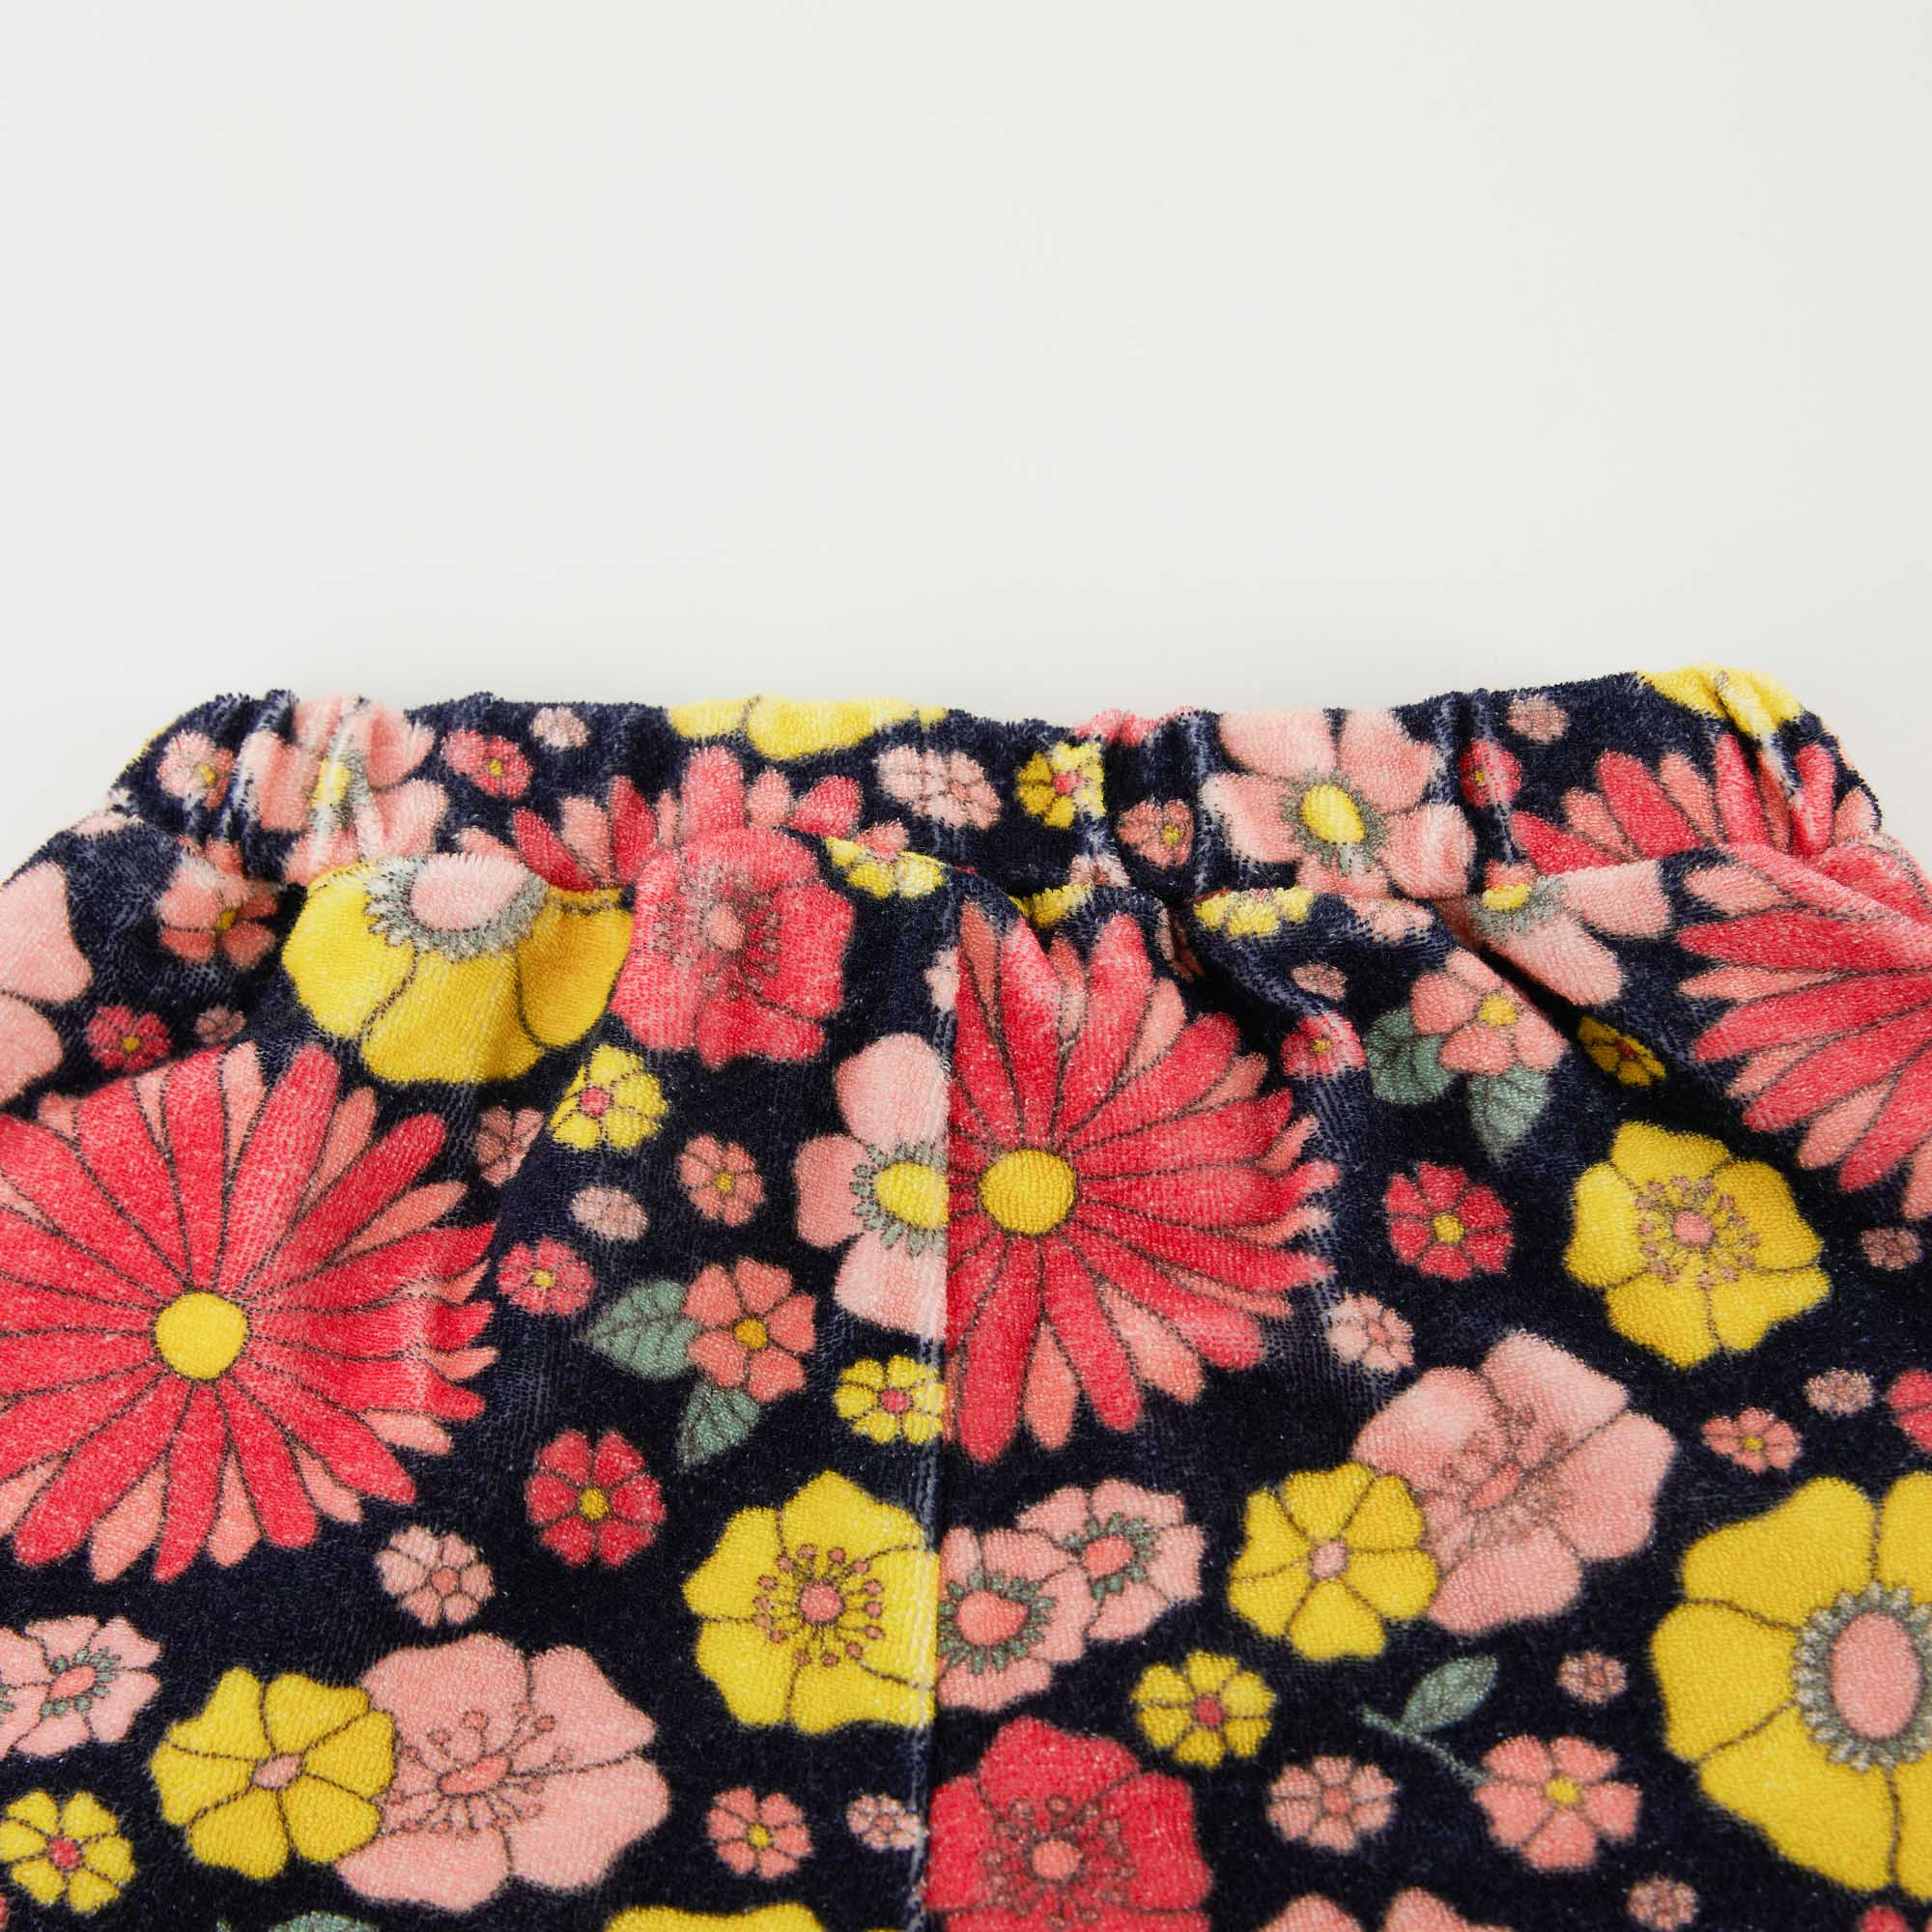 Girls Multicolor Flower Trousers